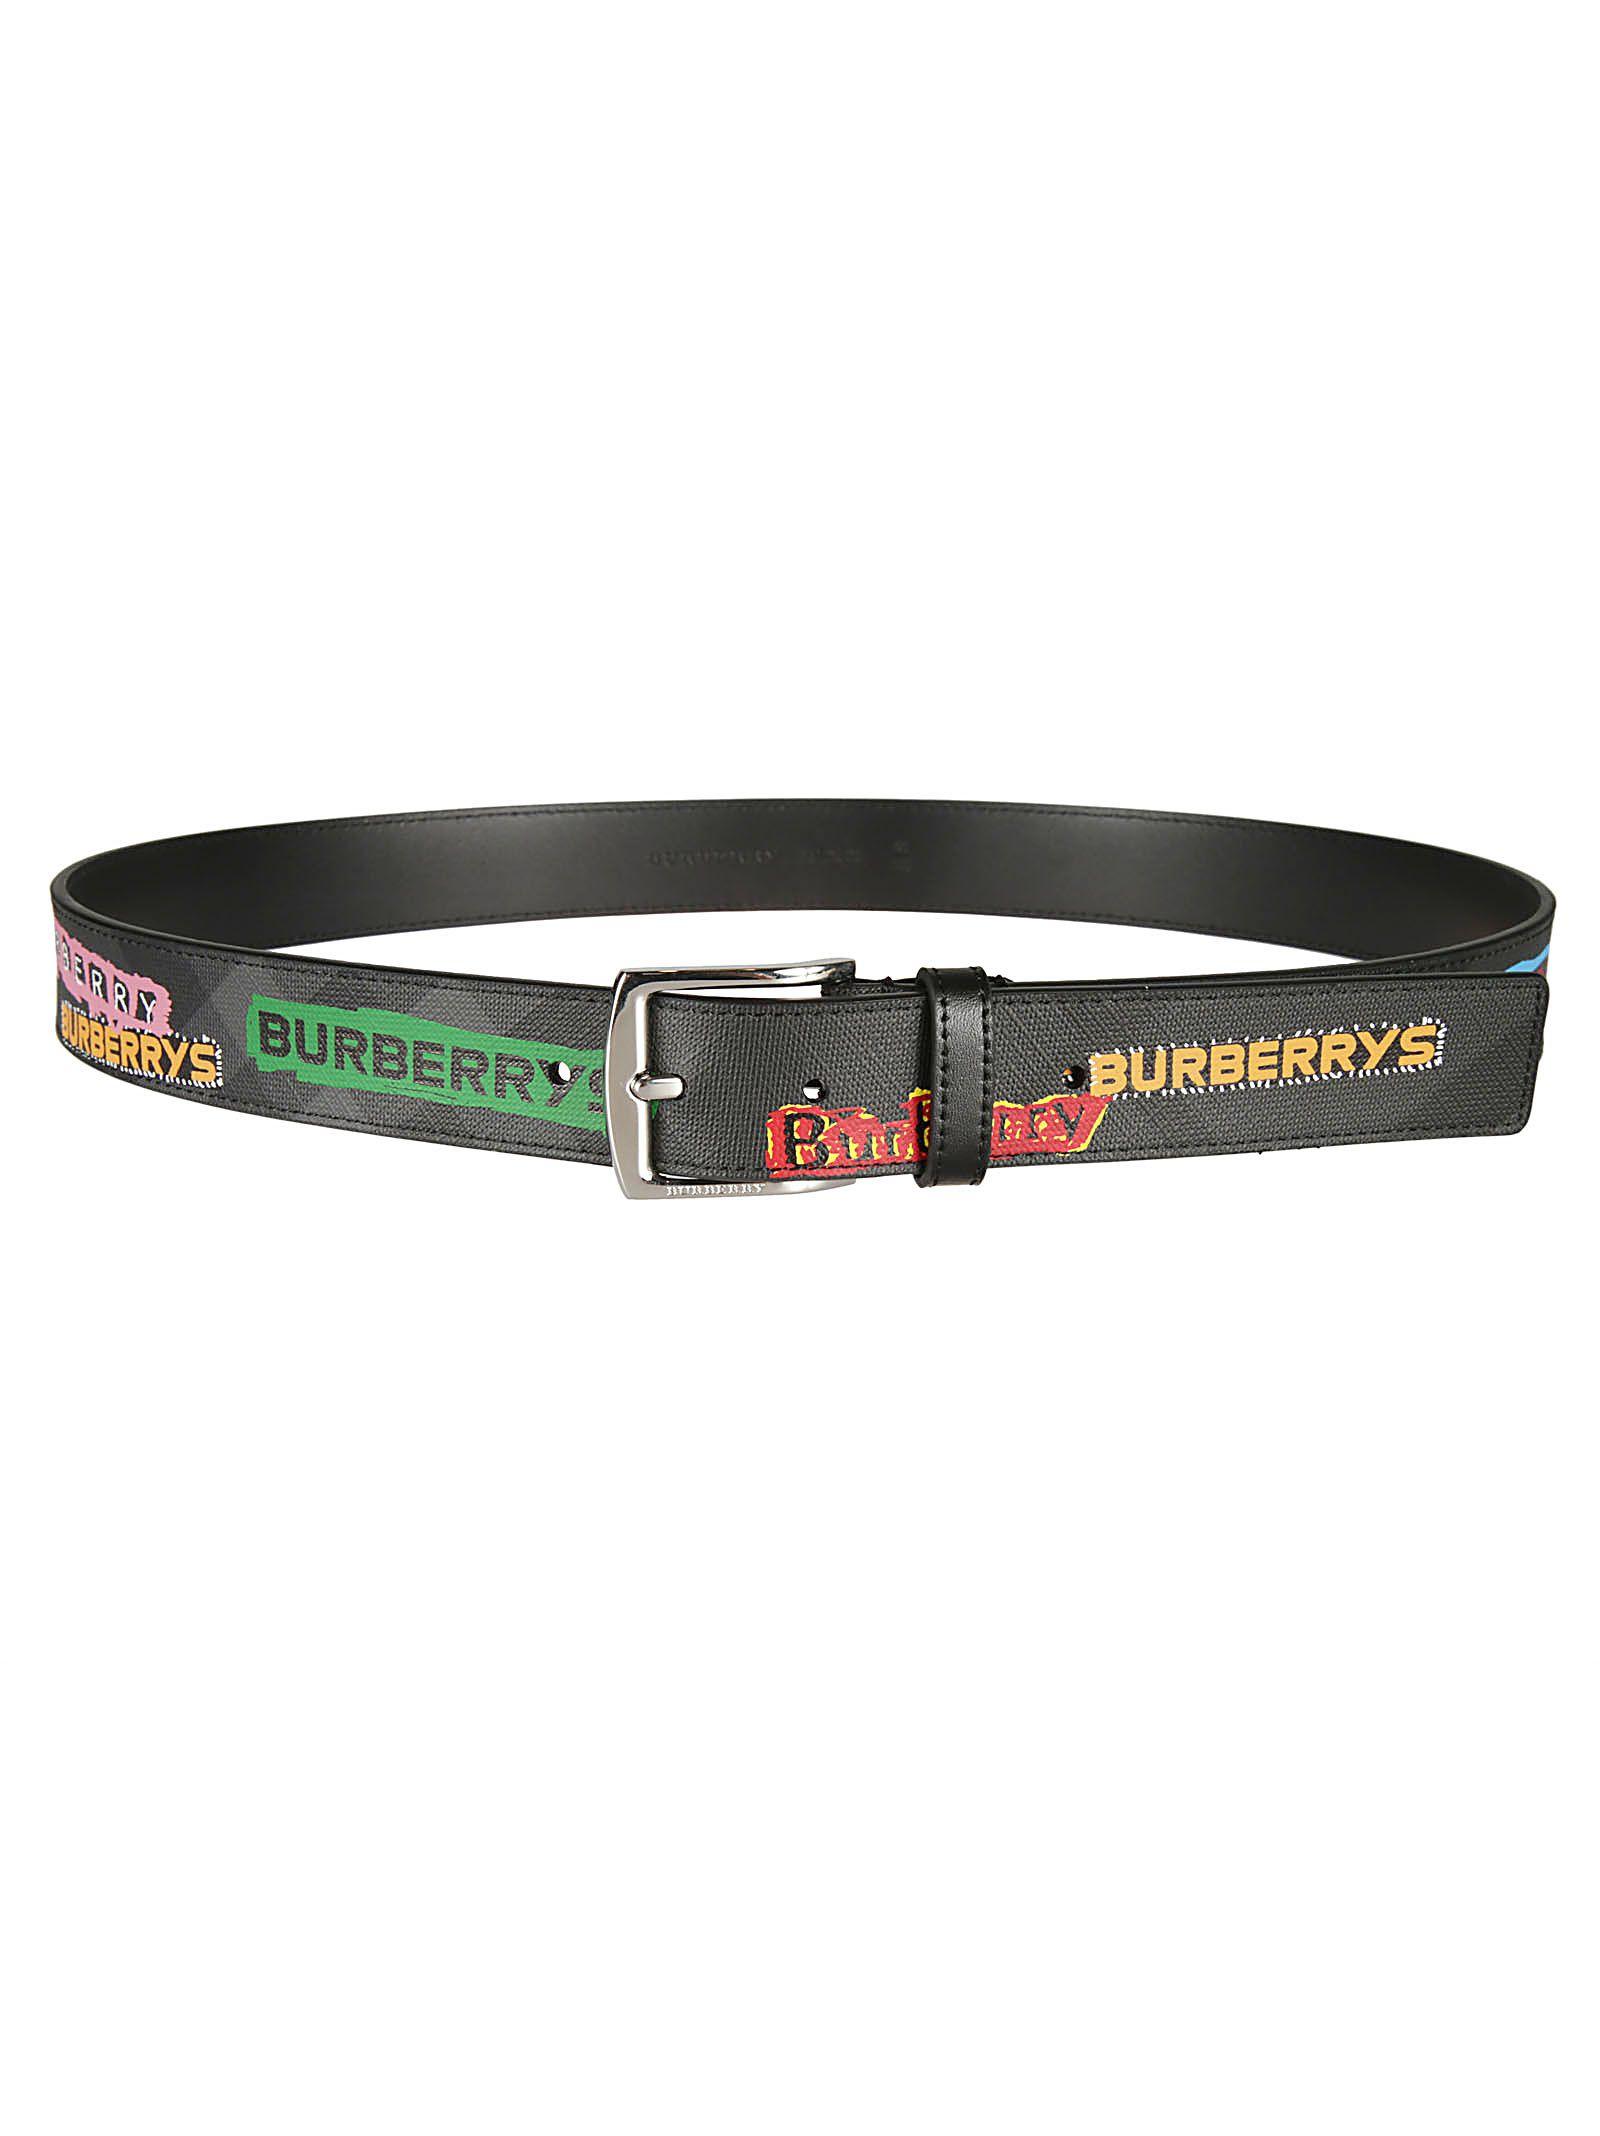 burberry tag print london check belt